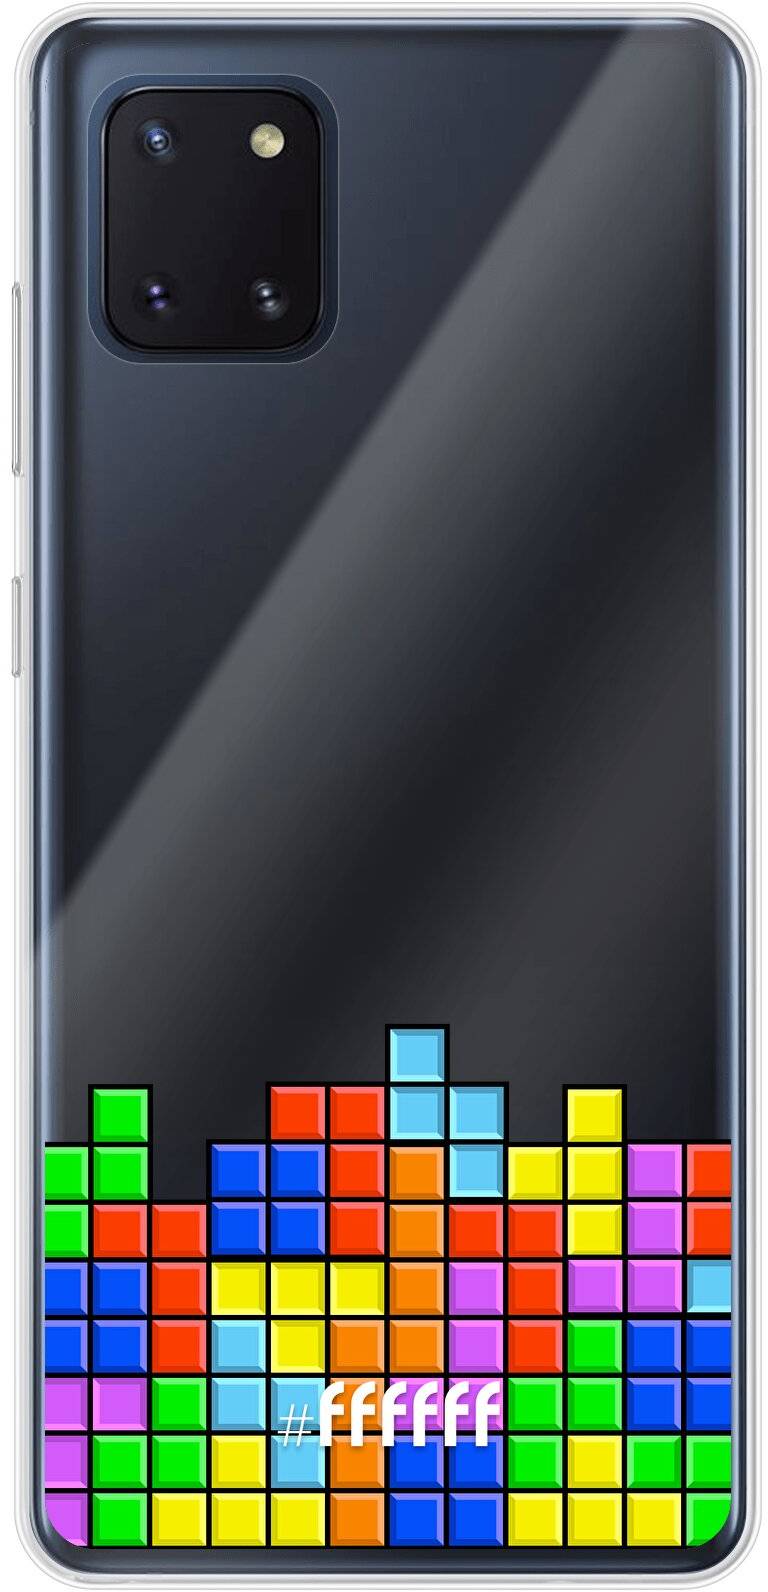 Tetris Galaxy Note 10 Lite